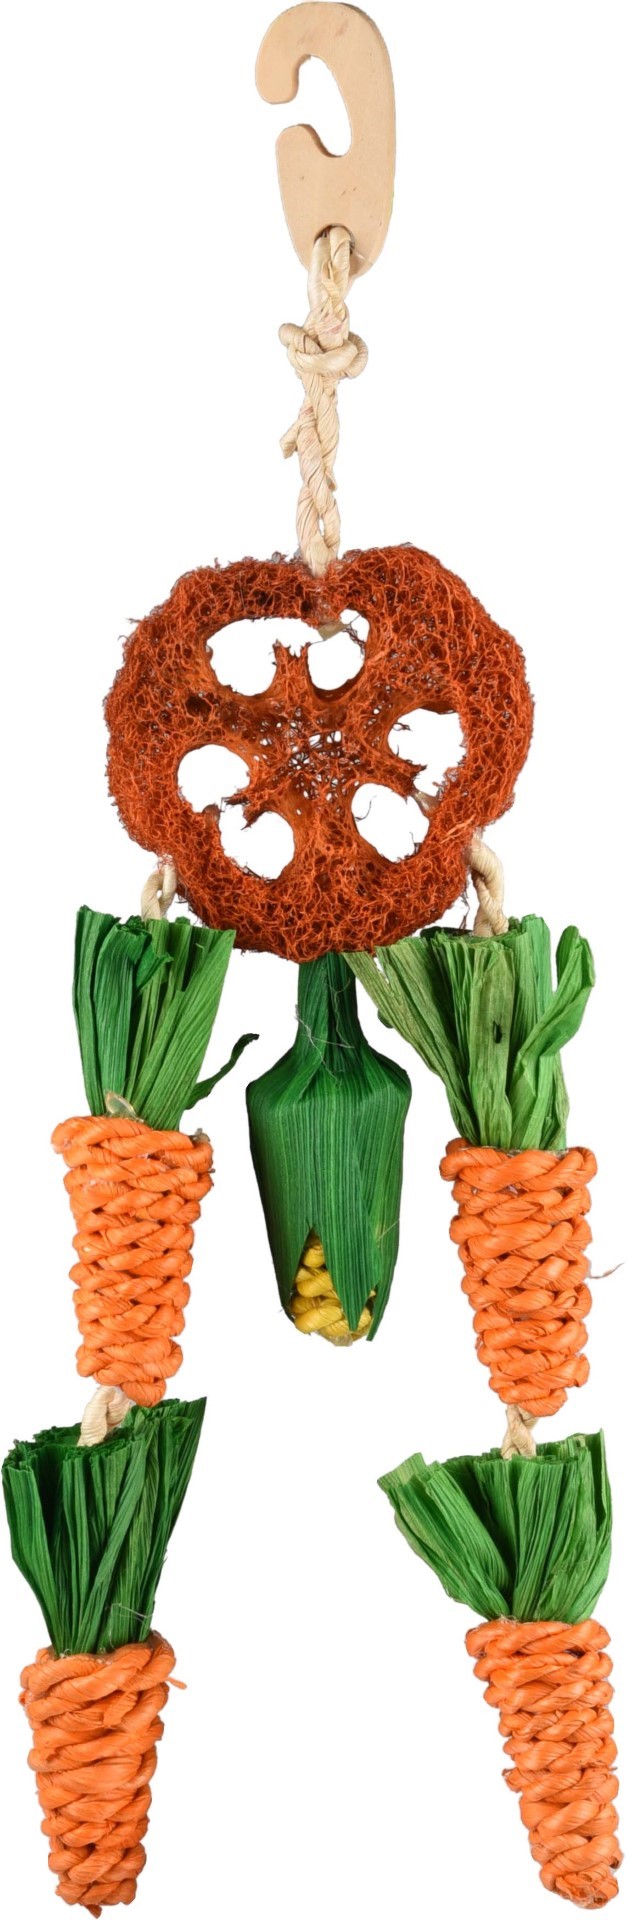 Knaagdierspeelgoed legou hanger wortel multi luffa 32 cm Flamingo